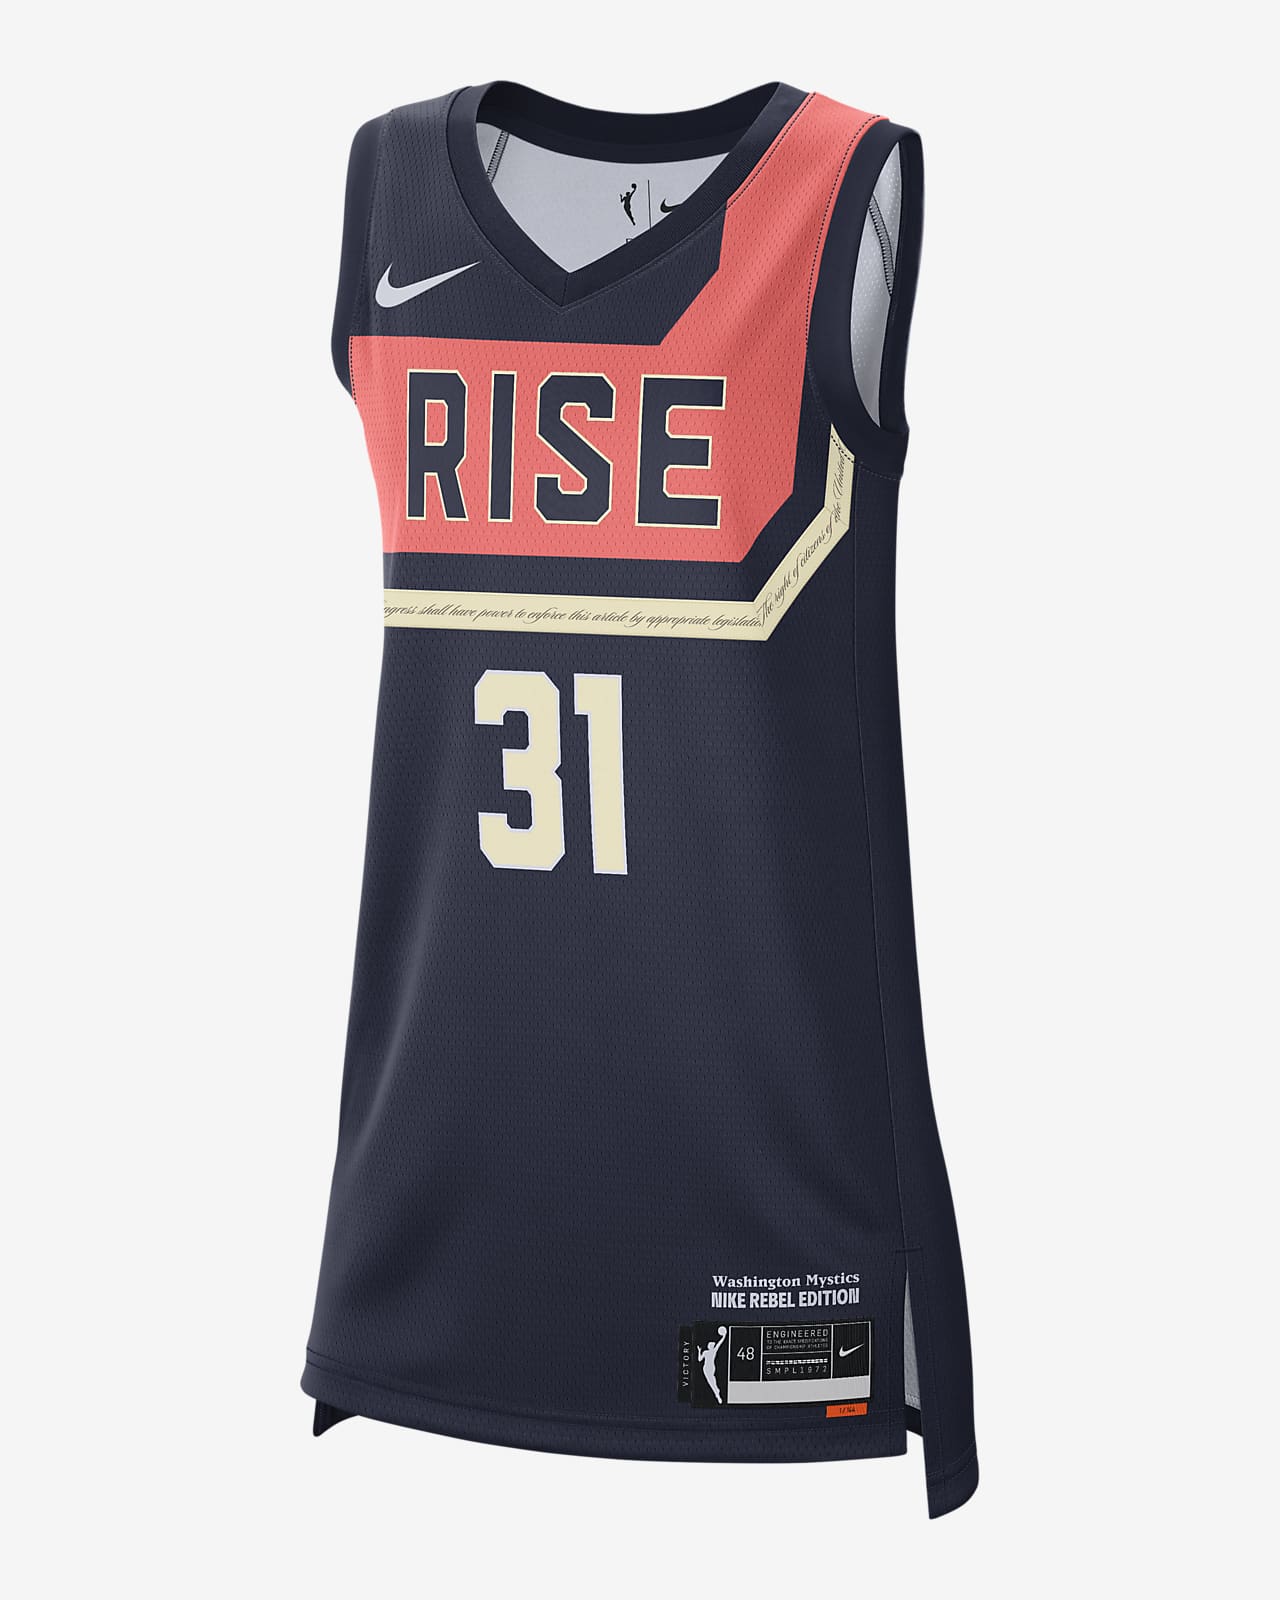 Camiseta Nike WNBA Victory para Mystics Rebel Edition. Nike.com